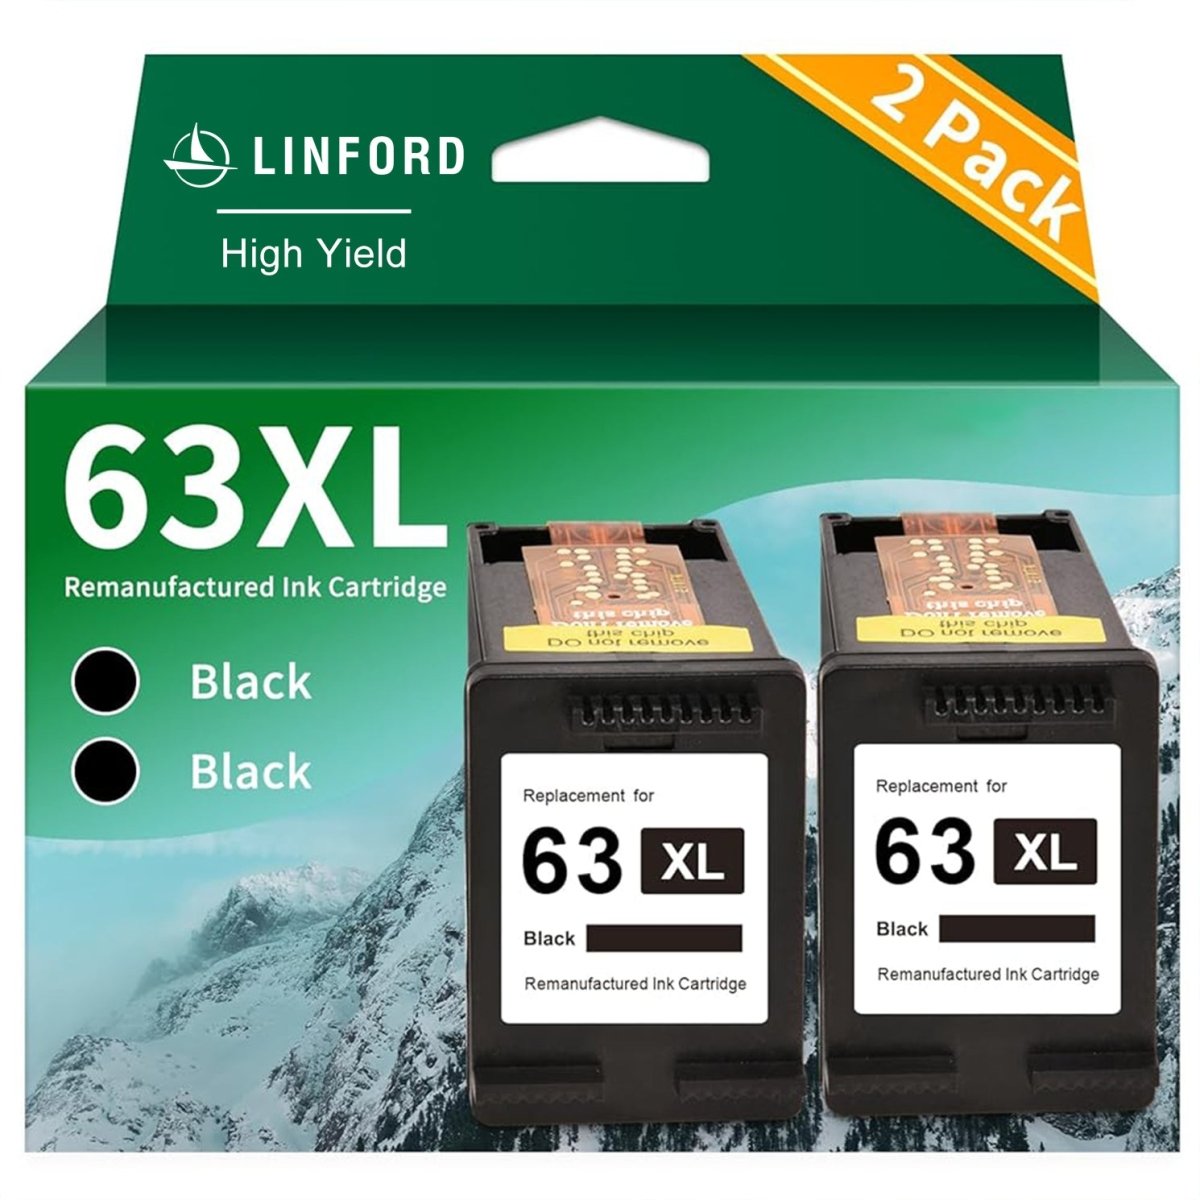 Remanufactured HP 63XL Black Ink Cartridge 2 Pack F6U64AN - Linford Office:Printer Ink & Toner Cartridge